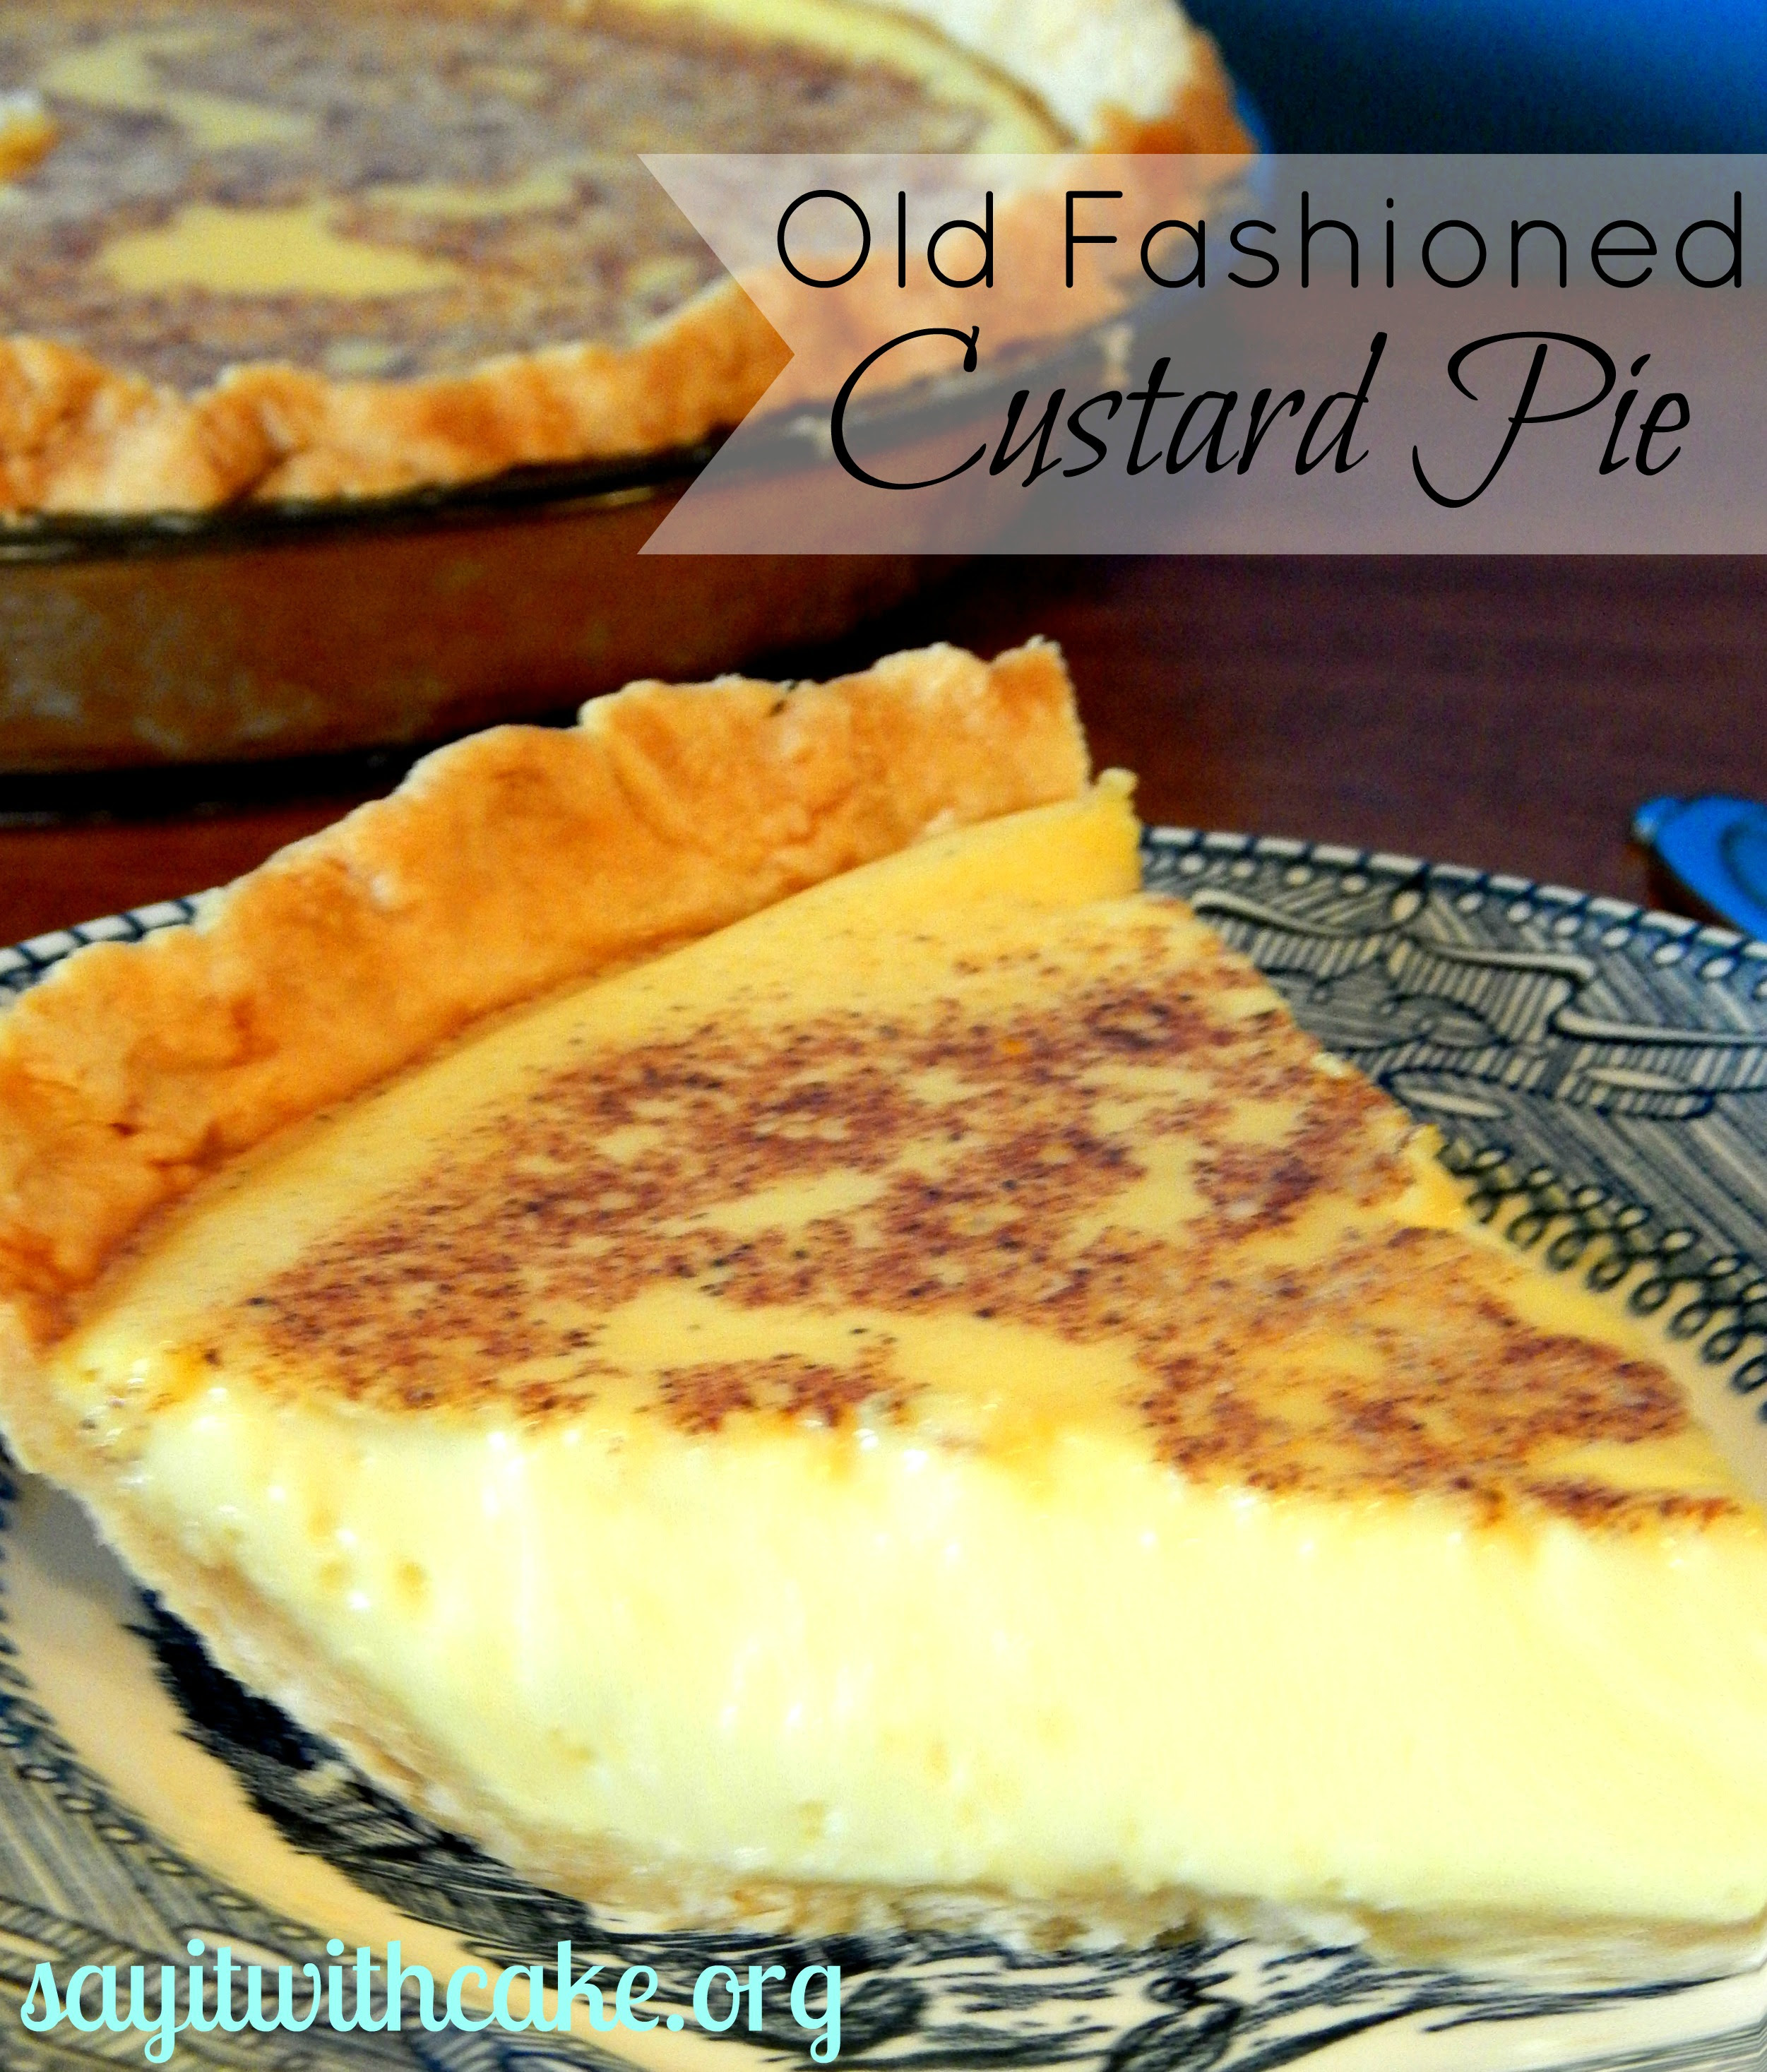 Old Fashioned Custard Pie Recipes Old Fashioned Custard Pie Just Like